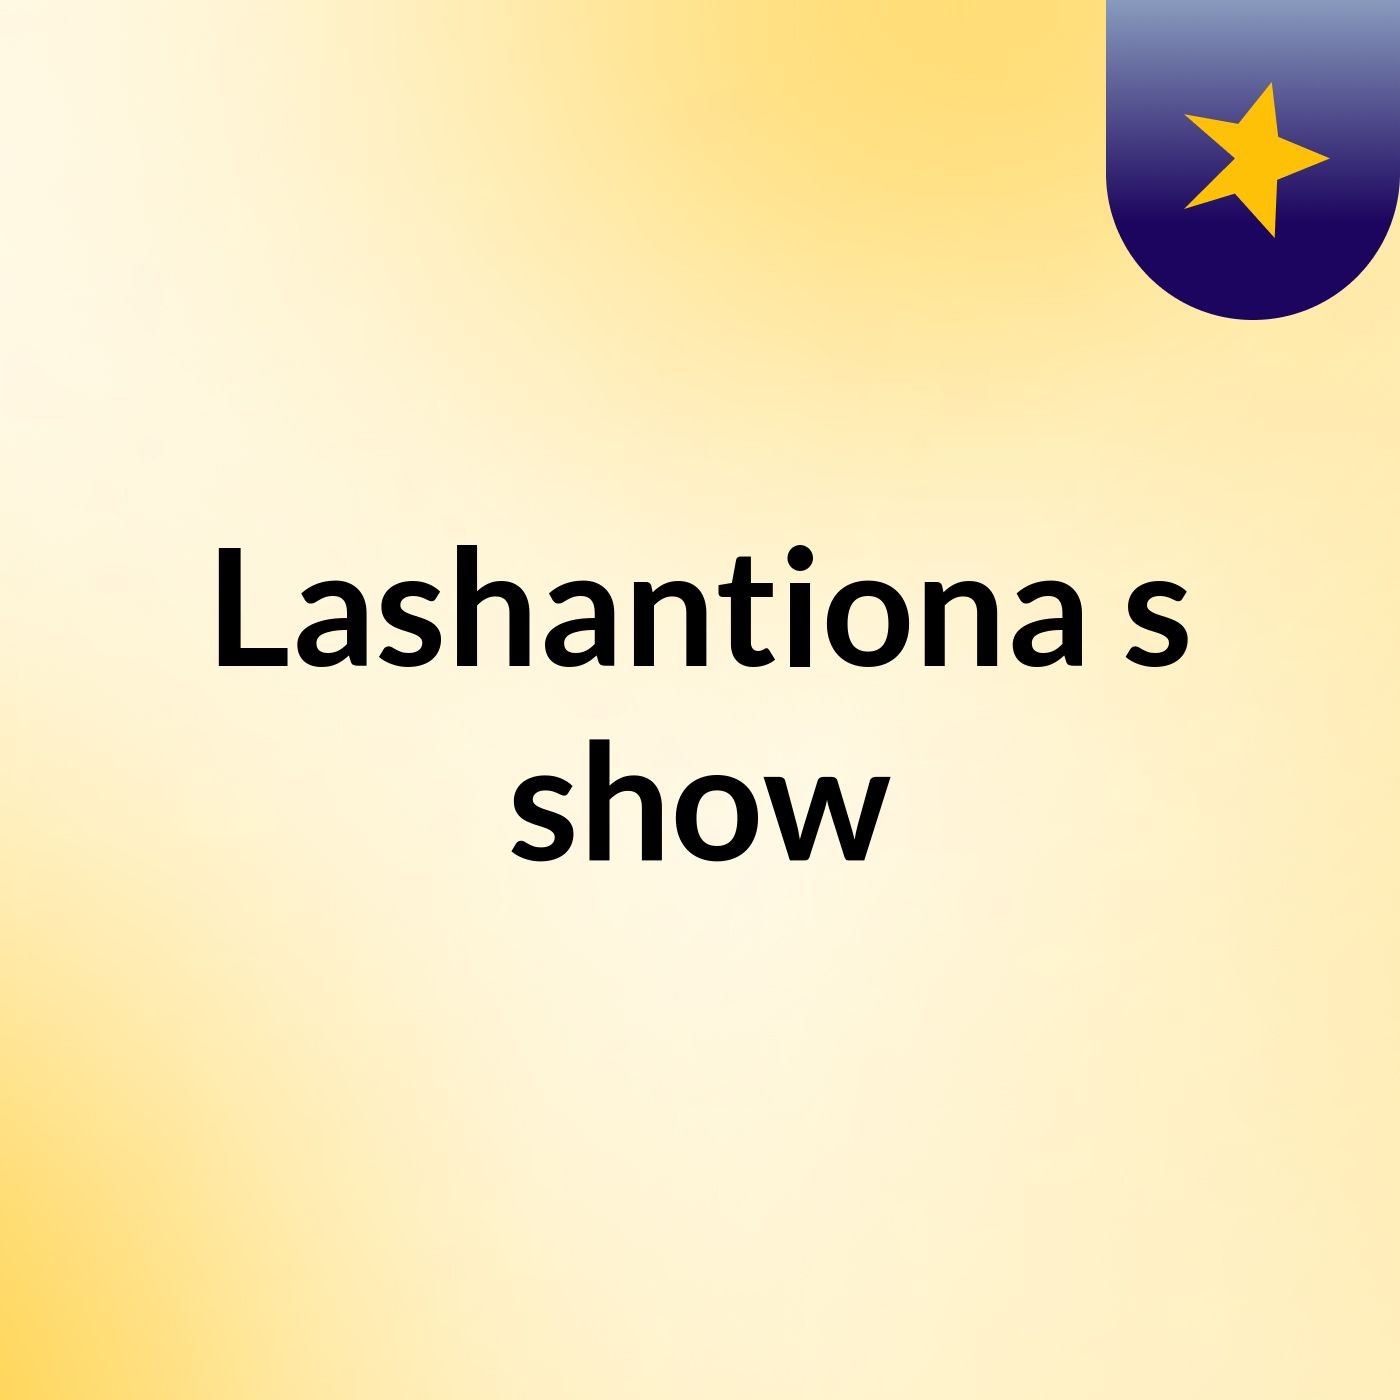 Lashantiona's show